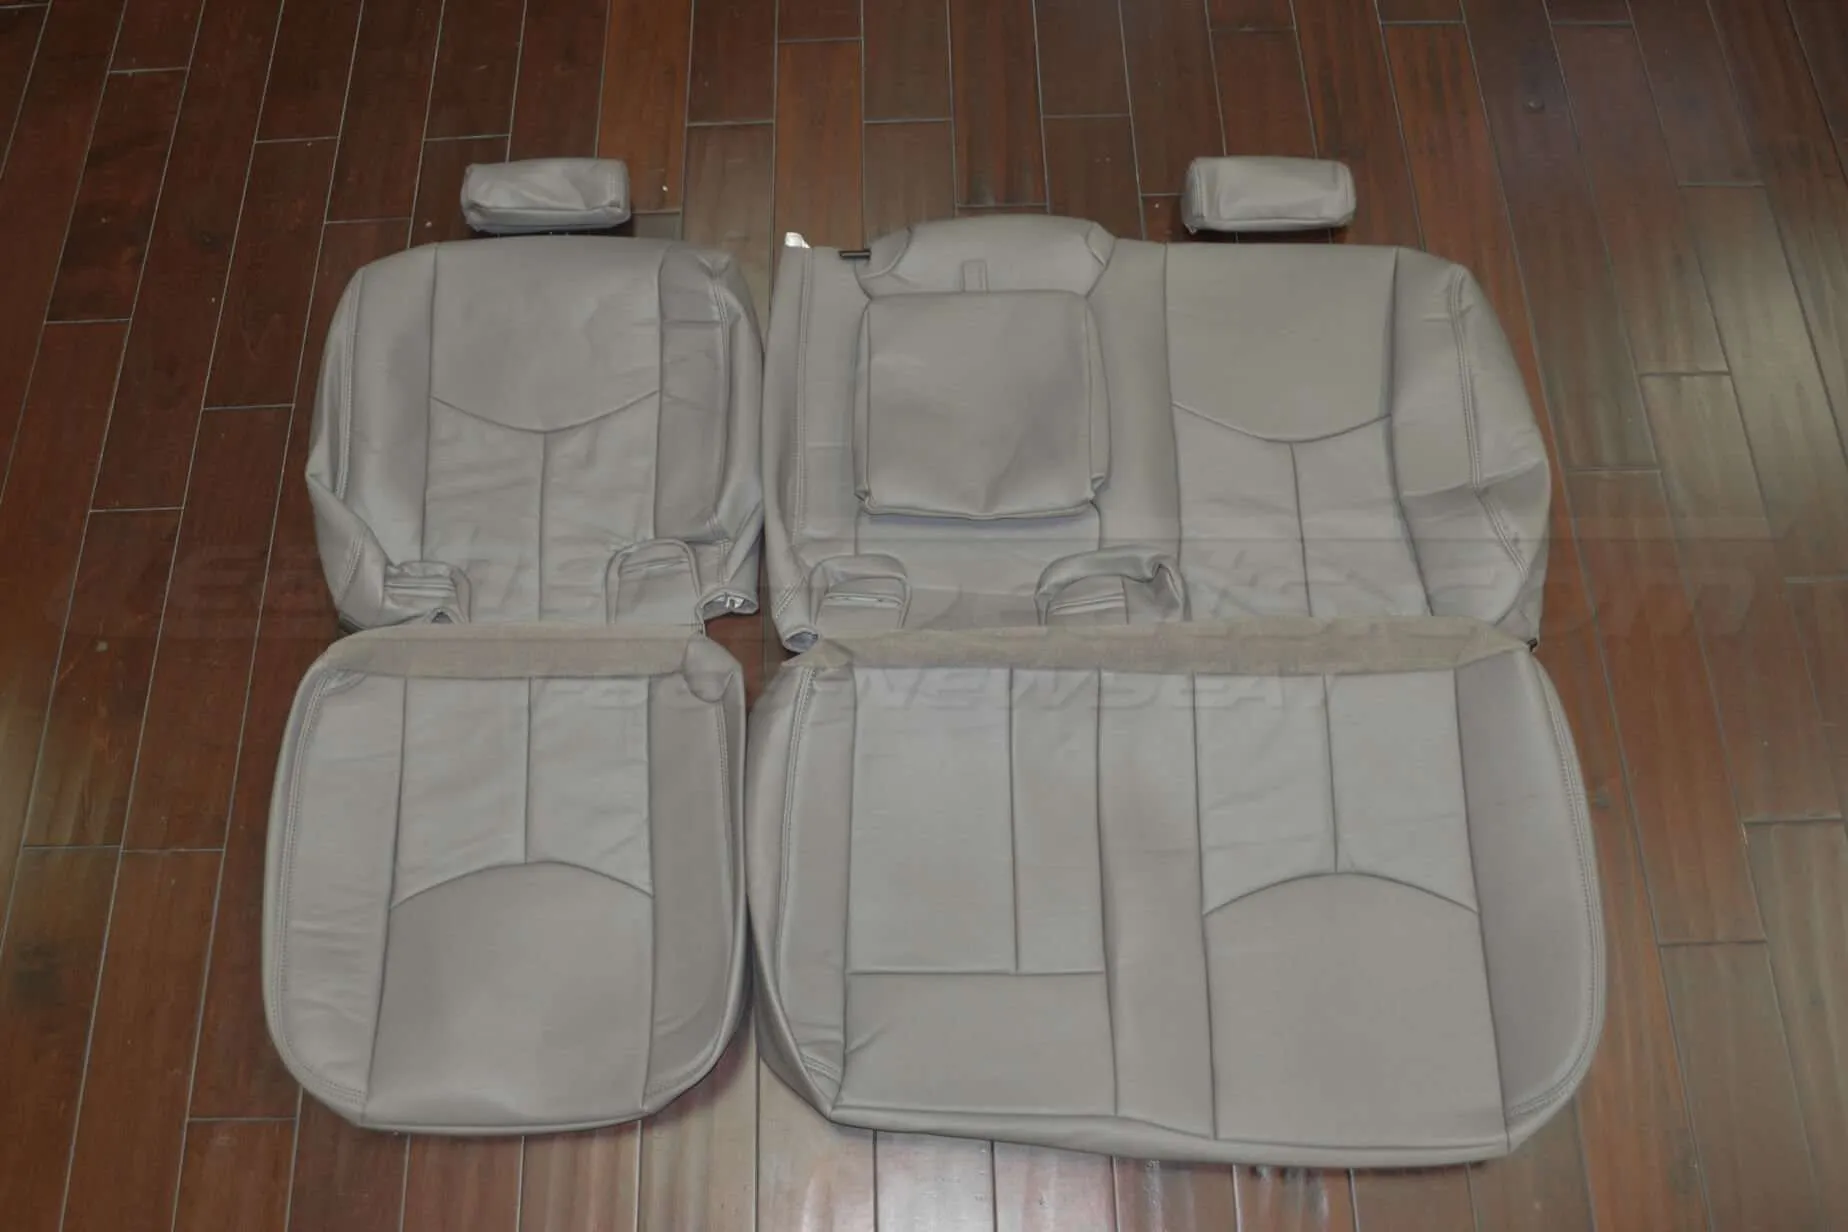 Chevrolet Silverado Upholstery Kit - Smoke - Rear seats with armrest